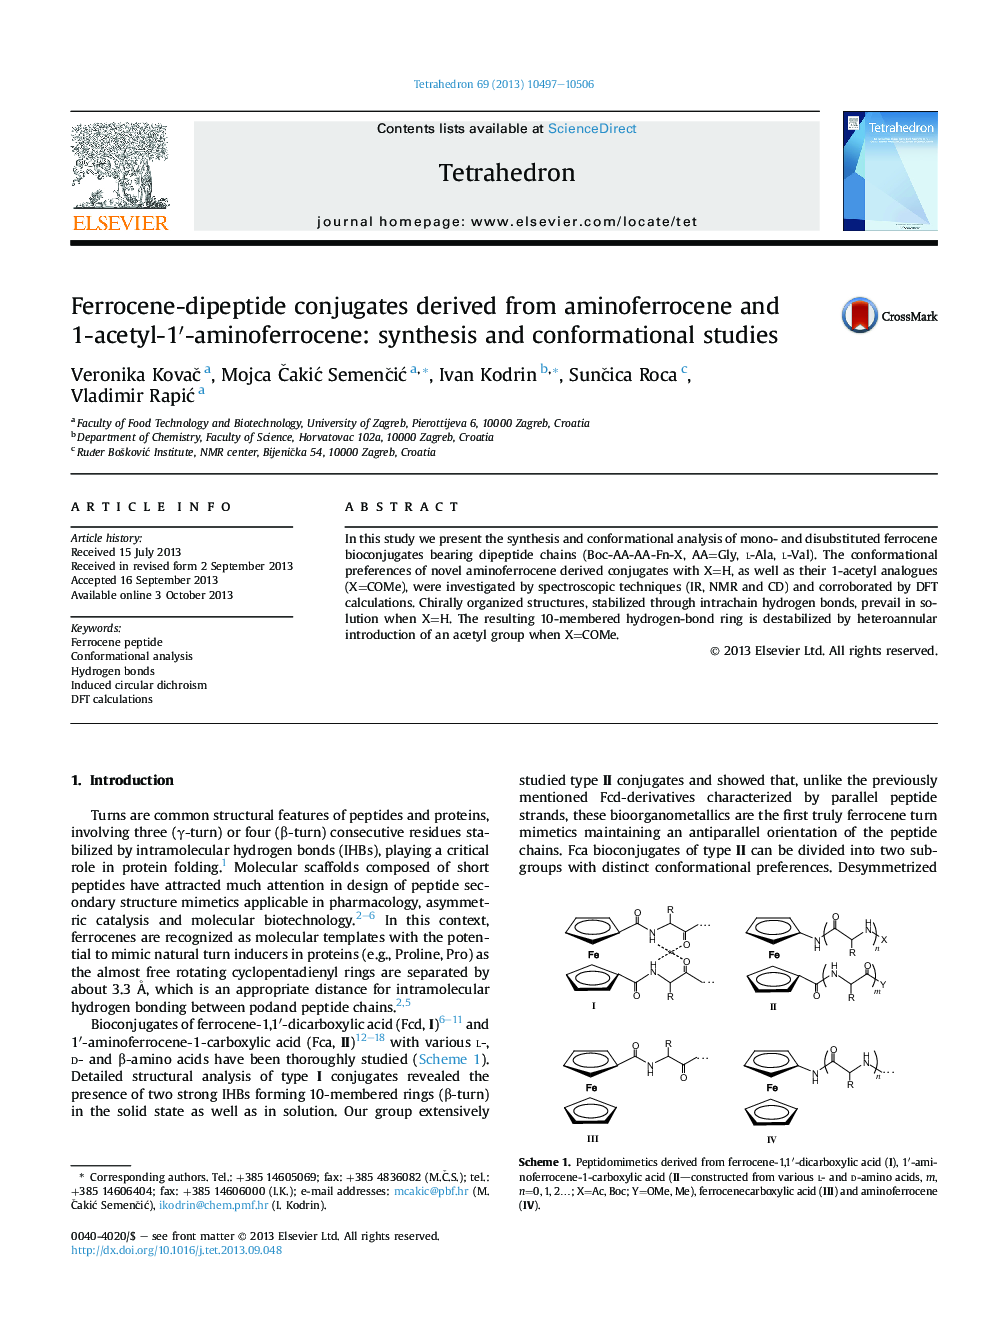 Ferrocene-dipeptide conjugates derived from aminoferrocene and 1-acetyl-1â²-aminoferrocene: synthesis and conformational studies